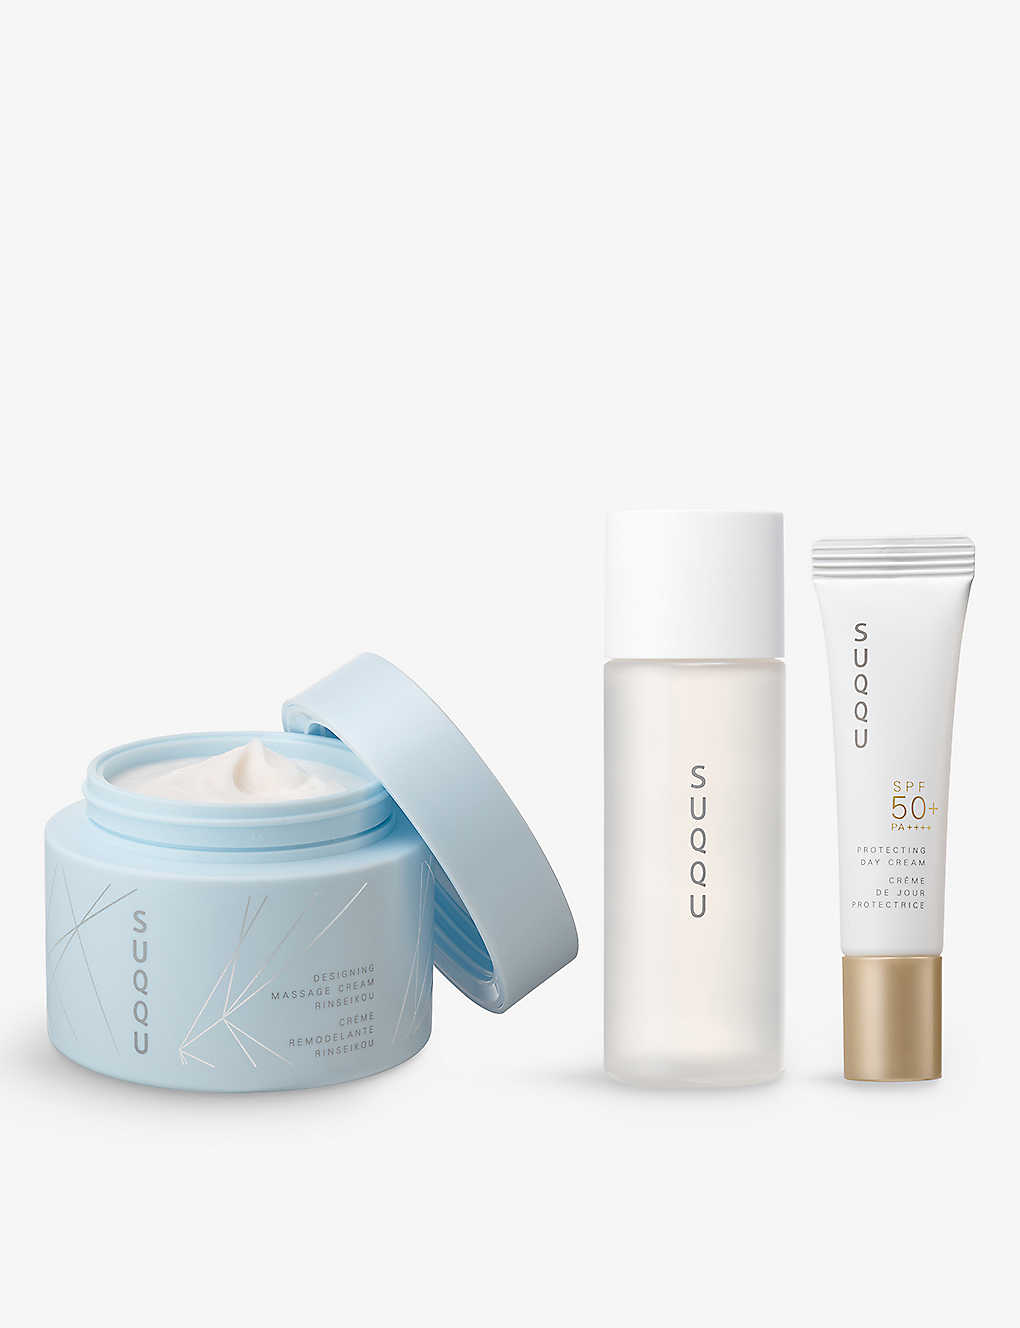 Suqqu Designing Massage Cream Rinseikou Limited-edition Gift Set In Multi